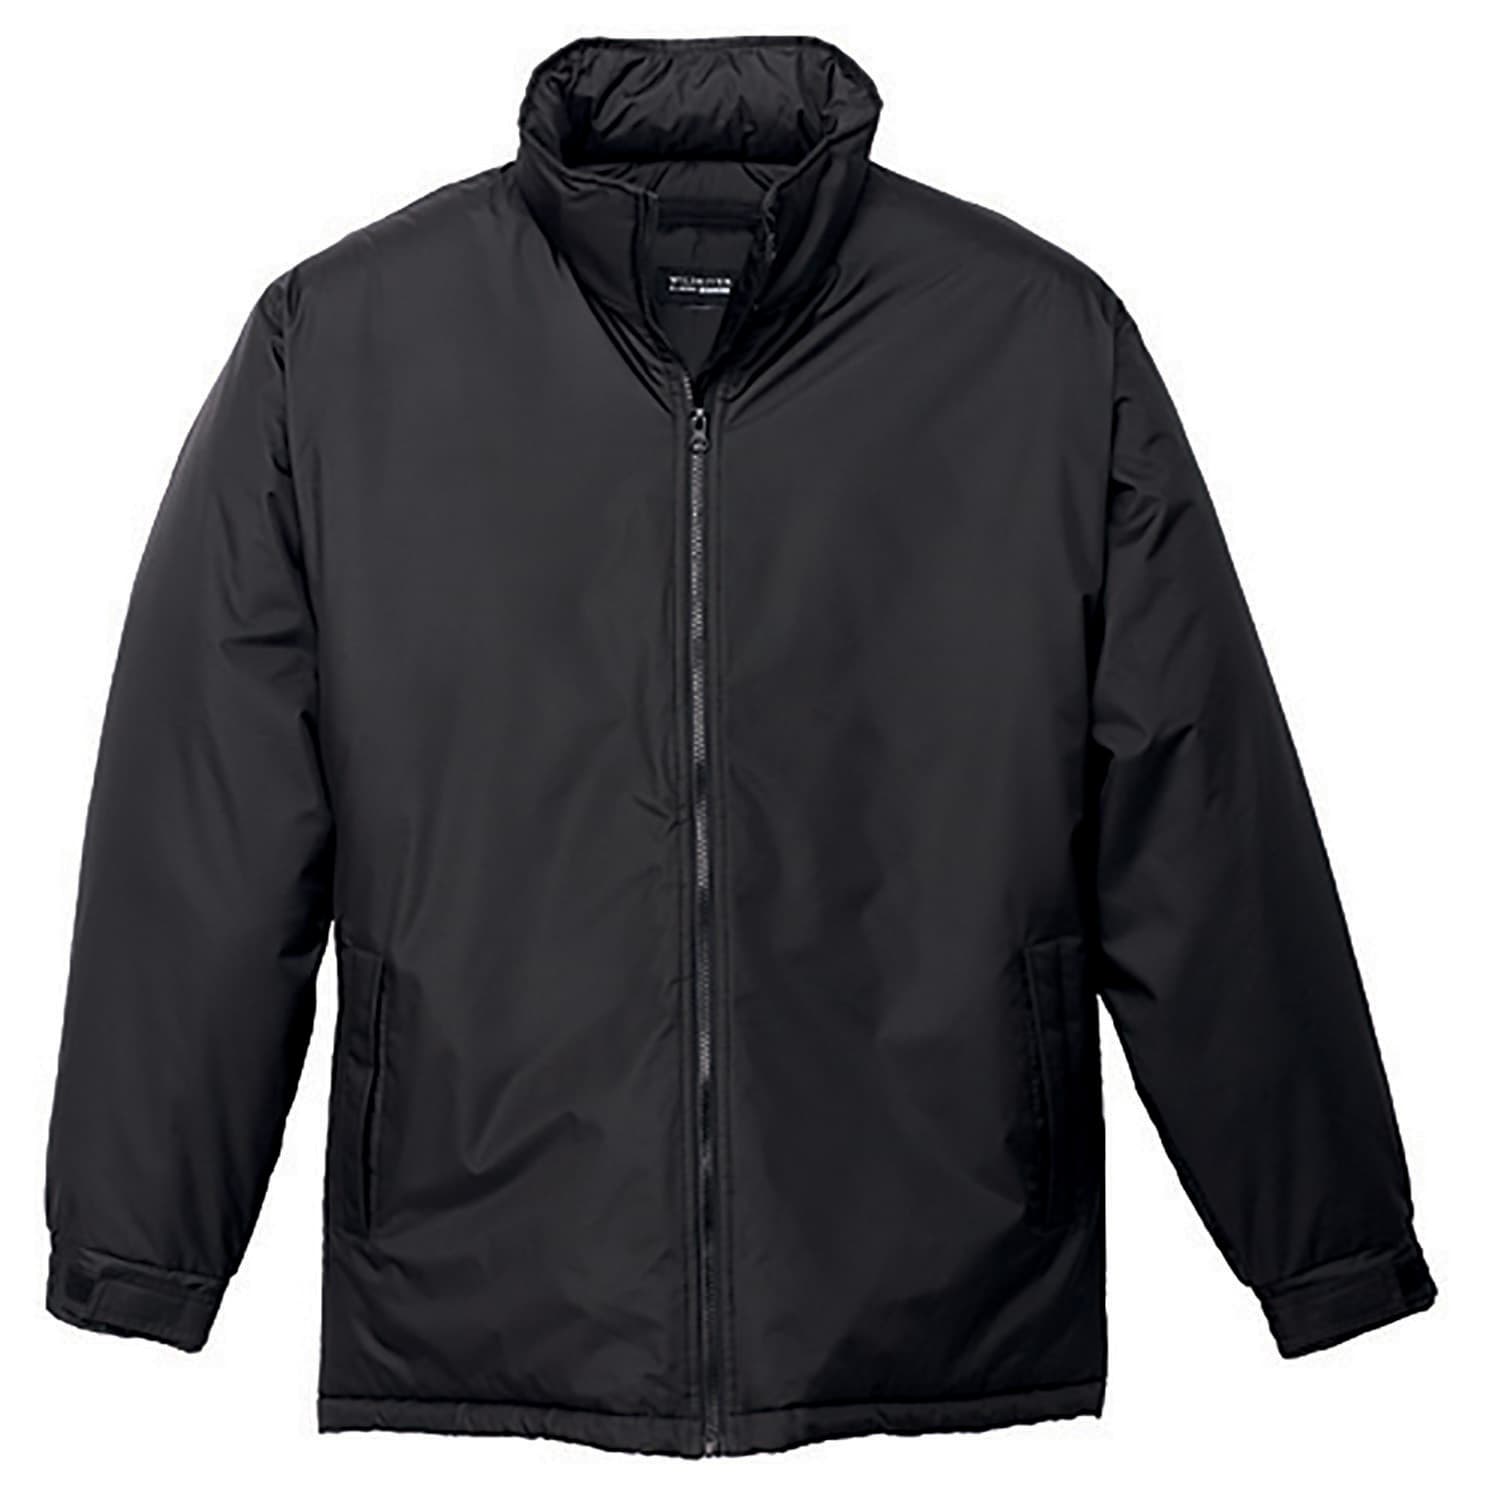 L09040 - Commuter Men’s Winter Jacket Black / S